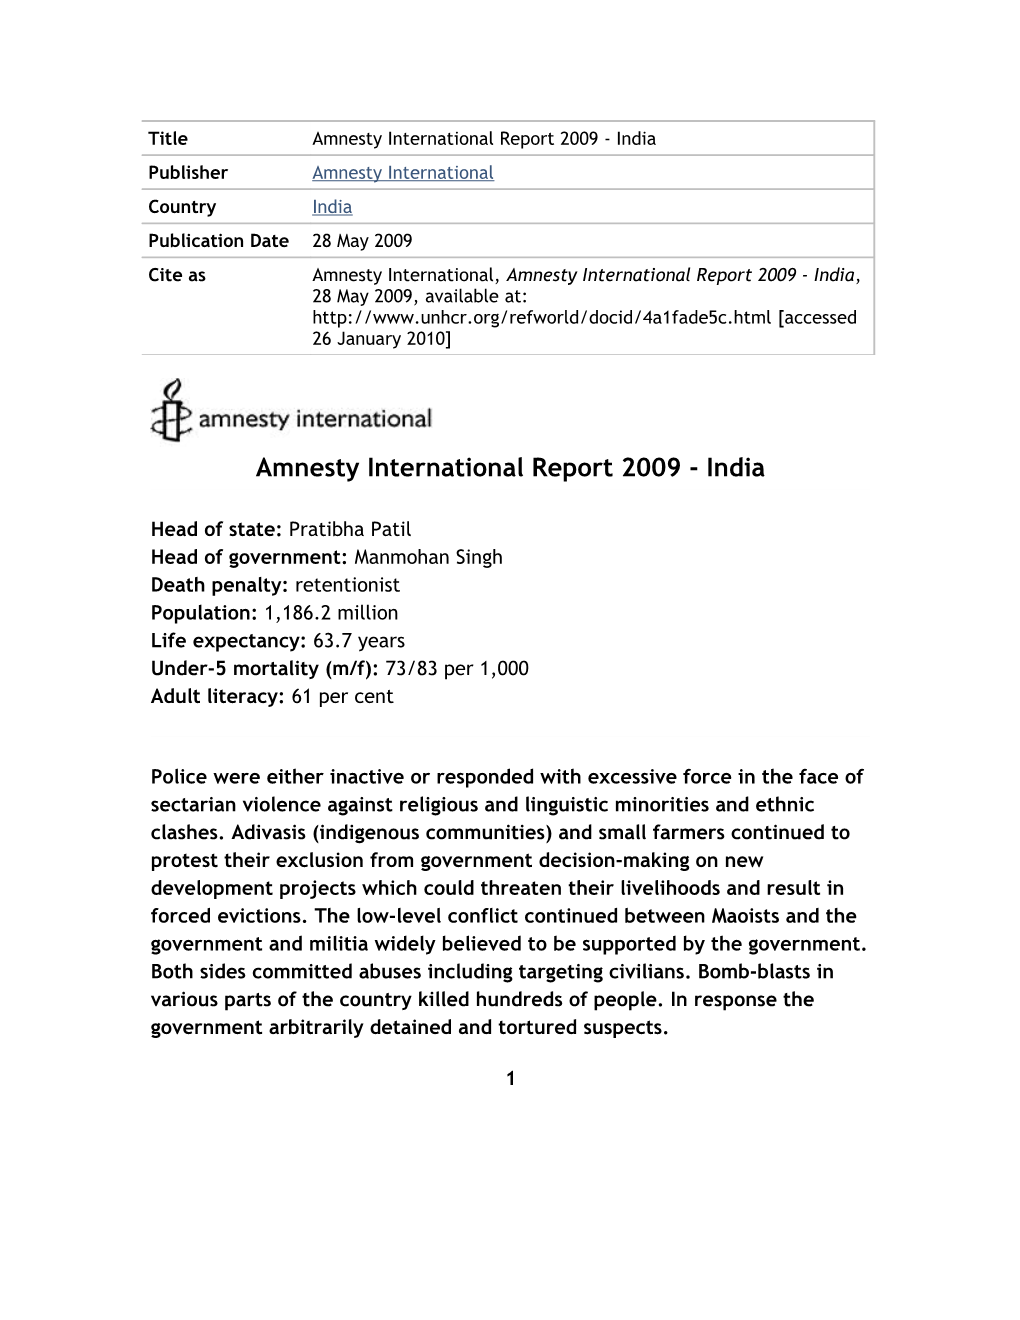 Amnesty International Report 2009 - India